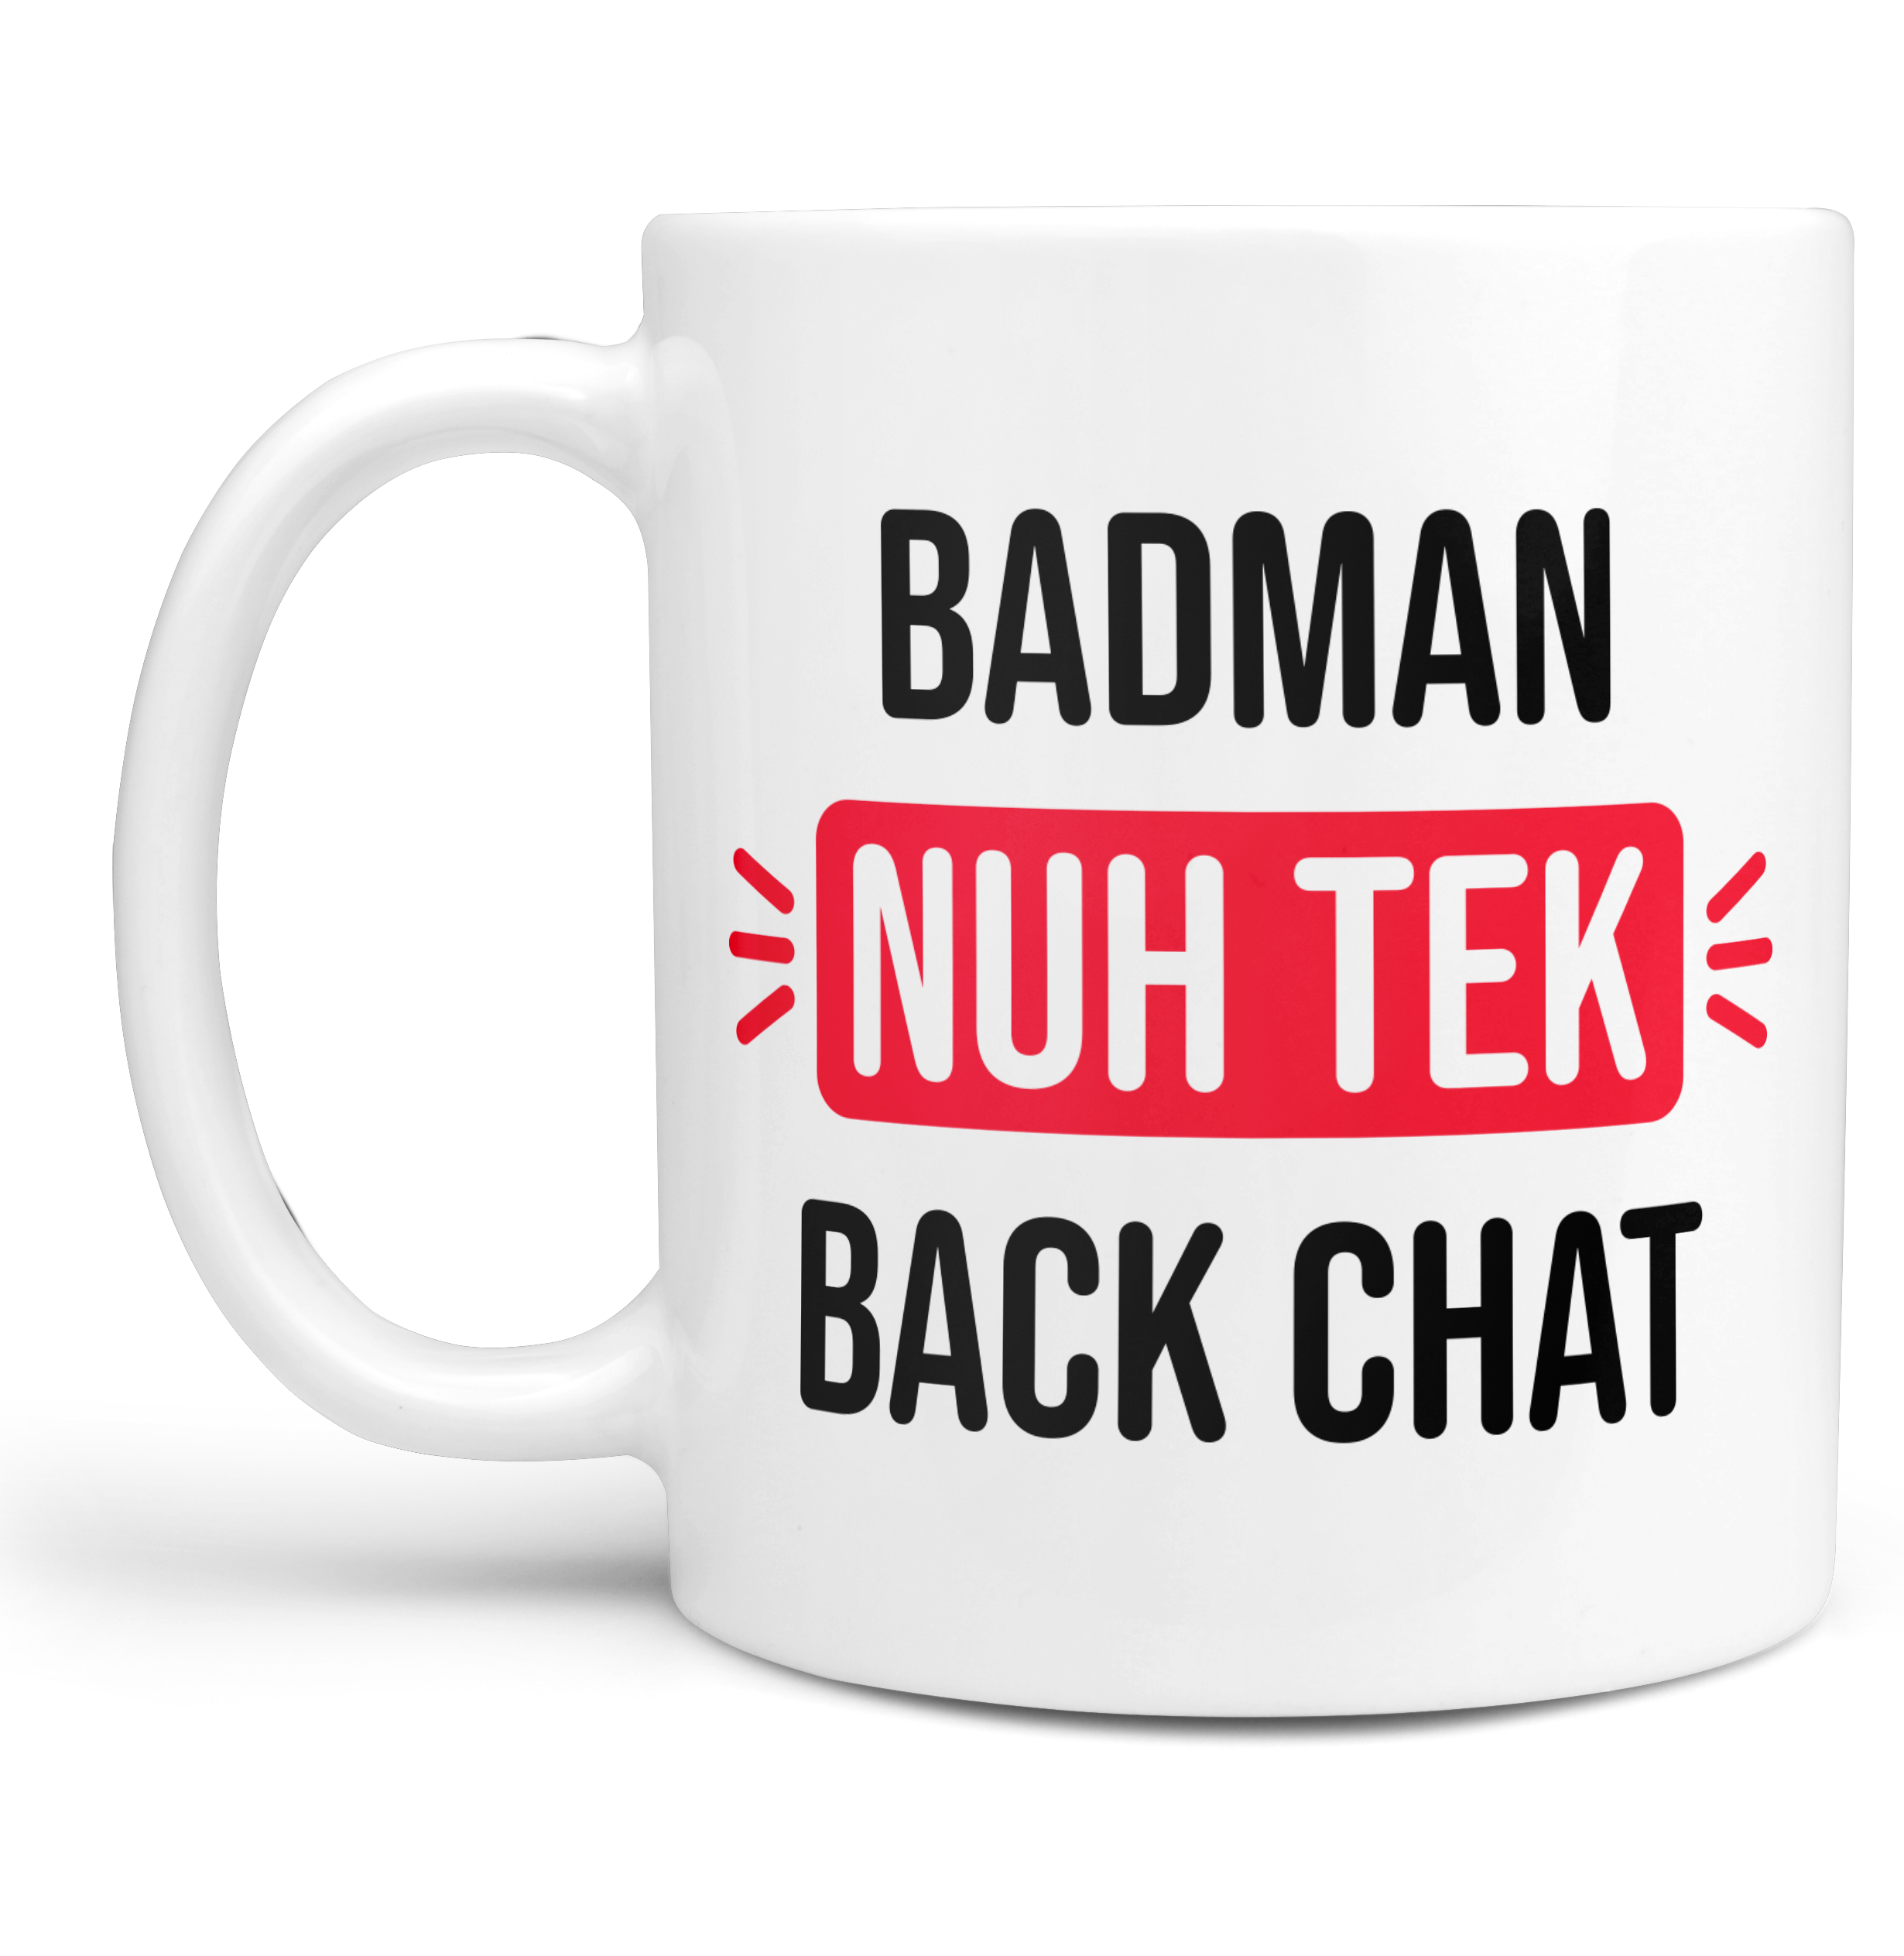 Badman Nuh Tek Back Chat